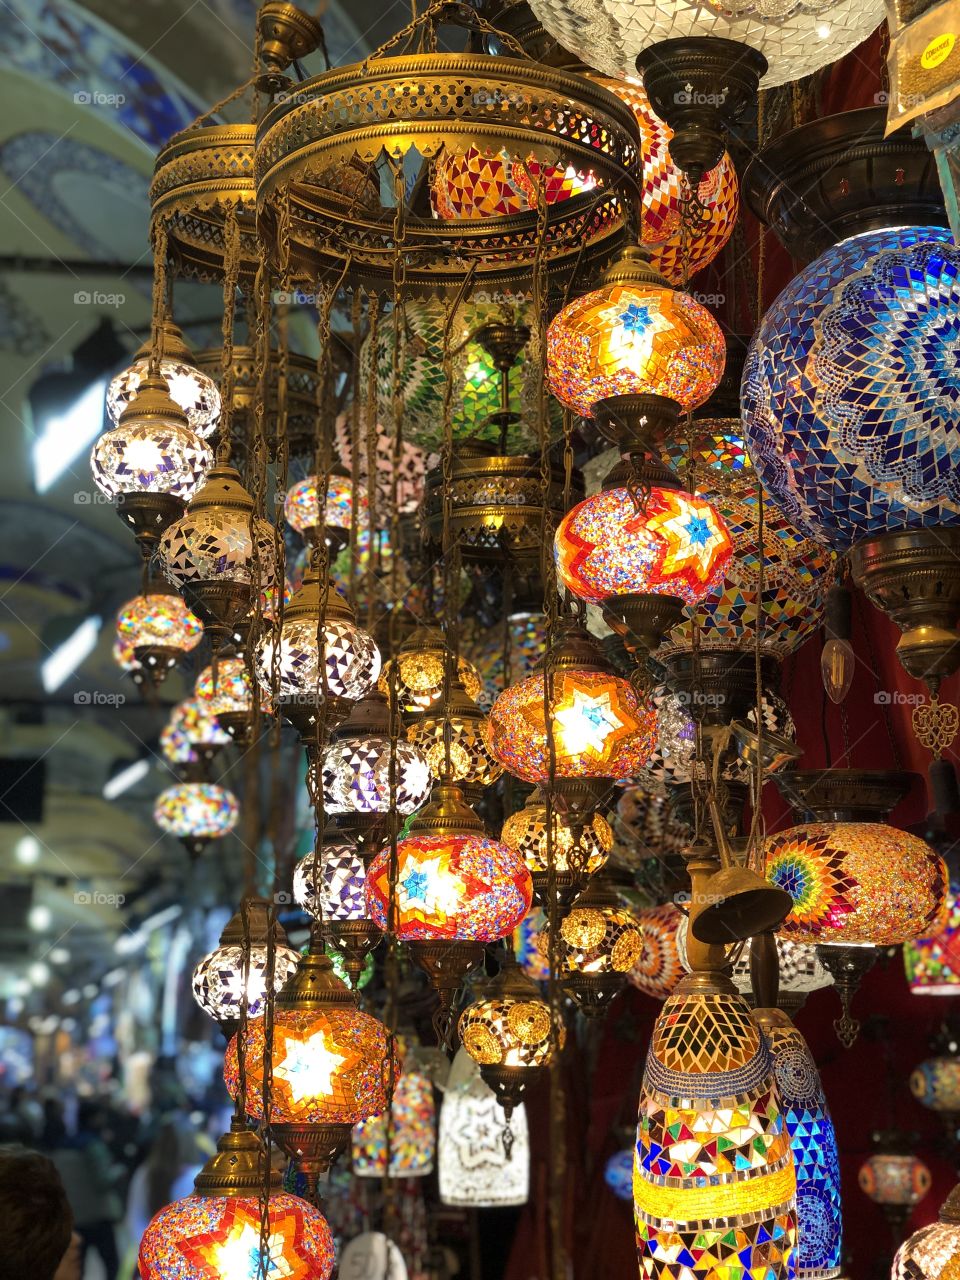 Ottoman mosaic lamps at the Grand Bazaar market, Istanbul, Turkey